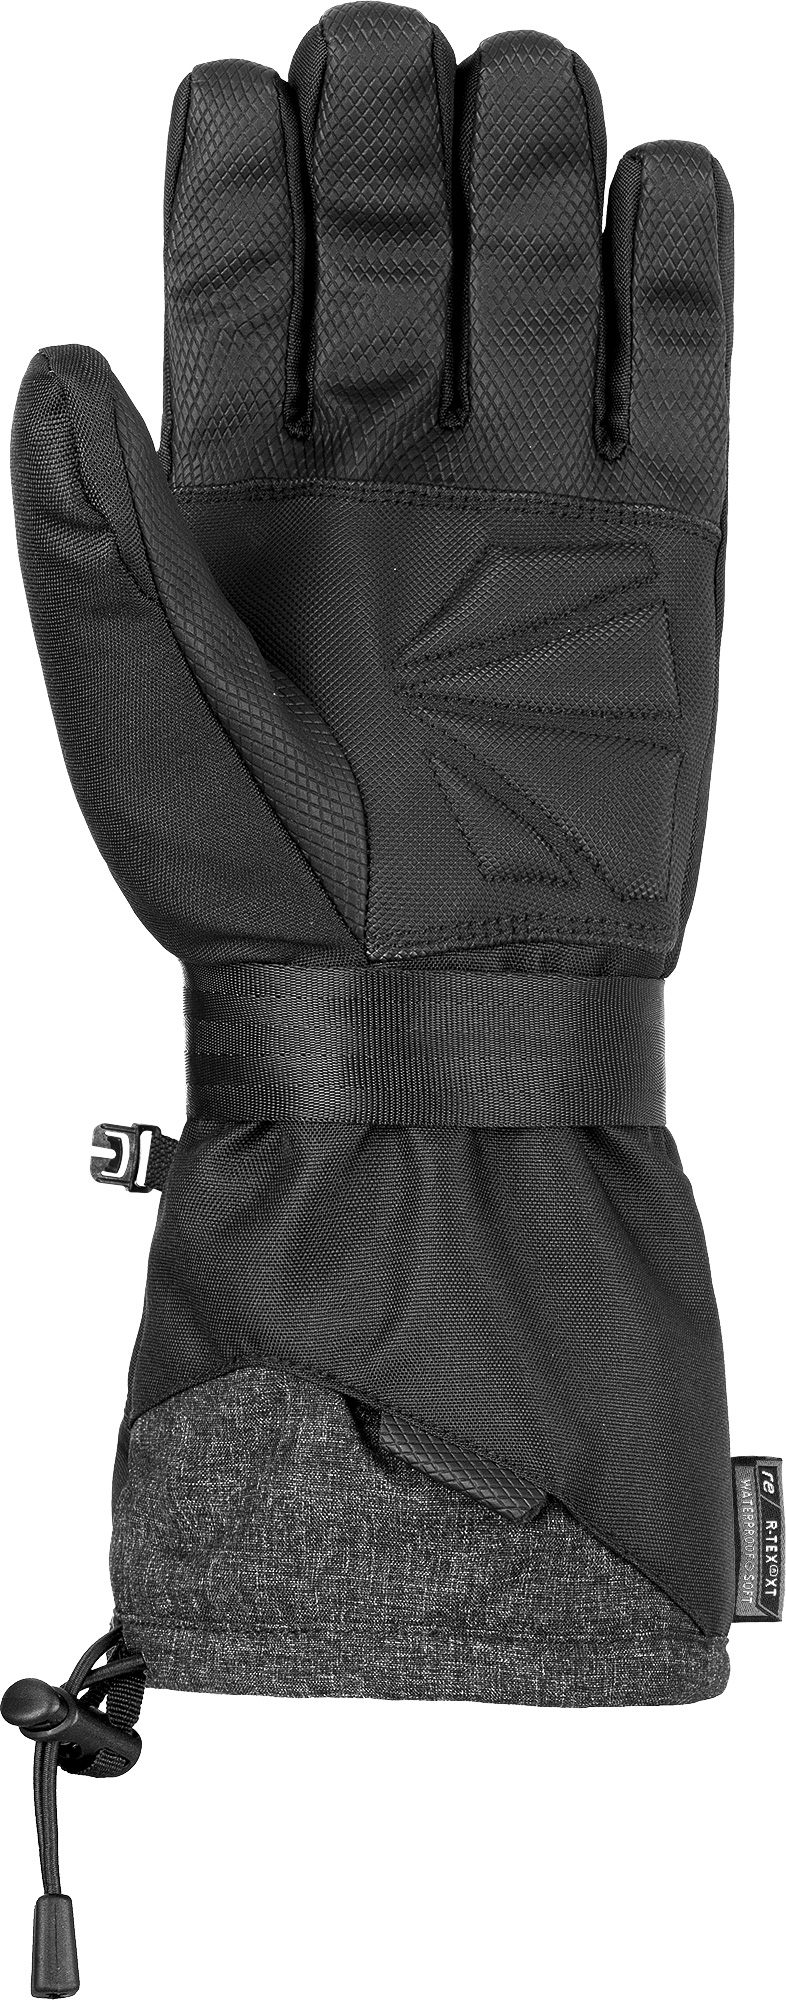 Перчатки с защитой Reusch 21-22 Baseplate R-Tex XT Black/Black Melange/Silver, цвет черный, размер 10 6004272 - фото 2